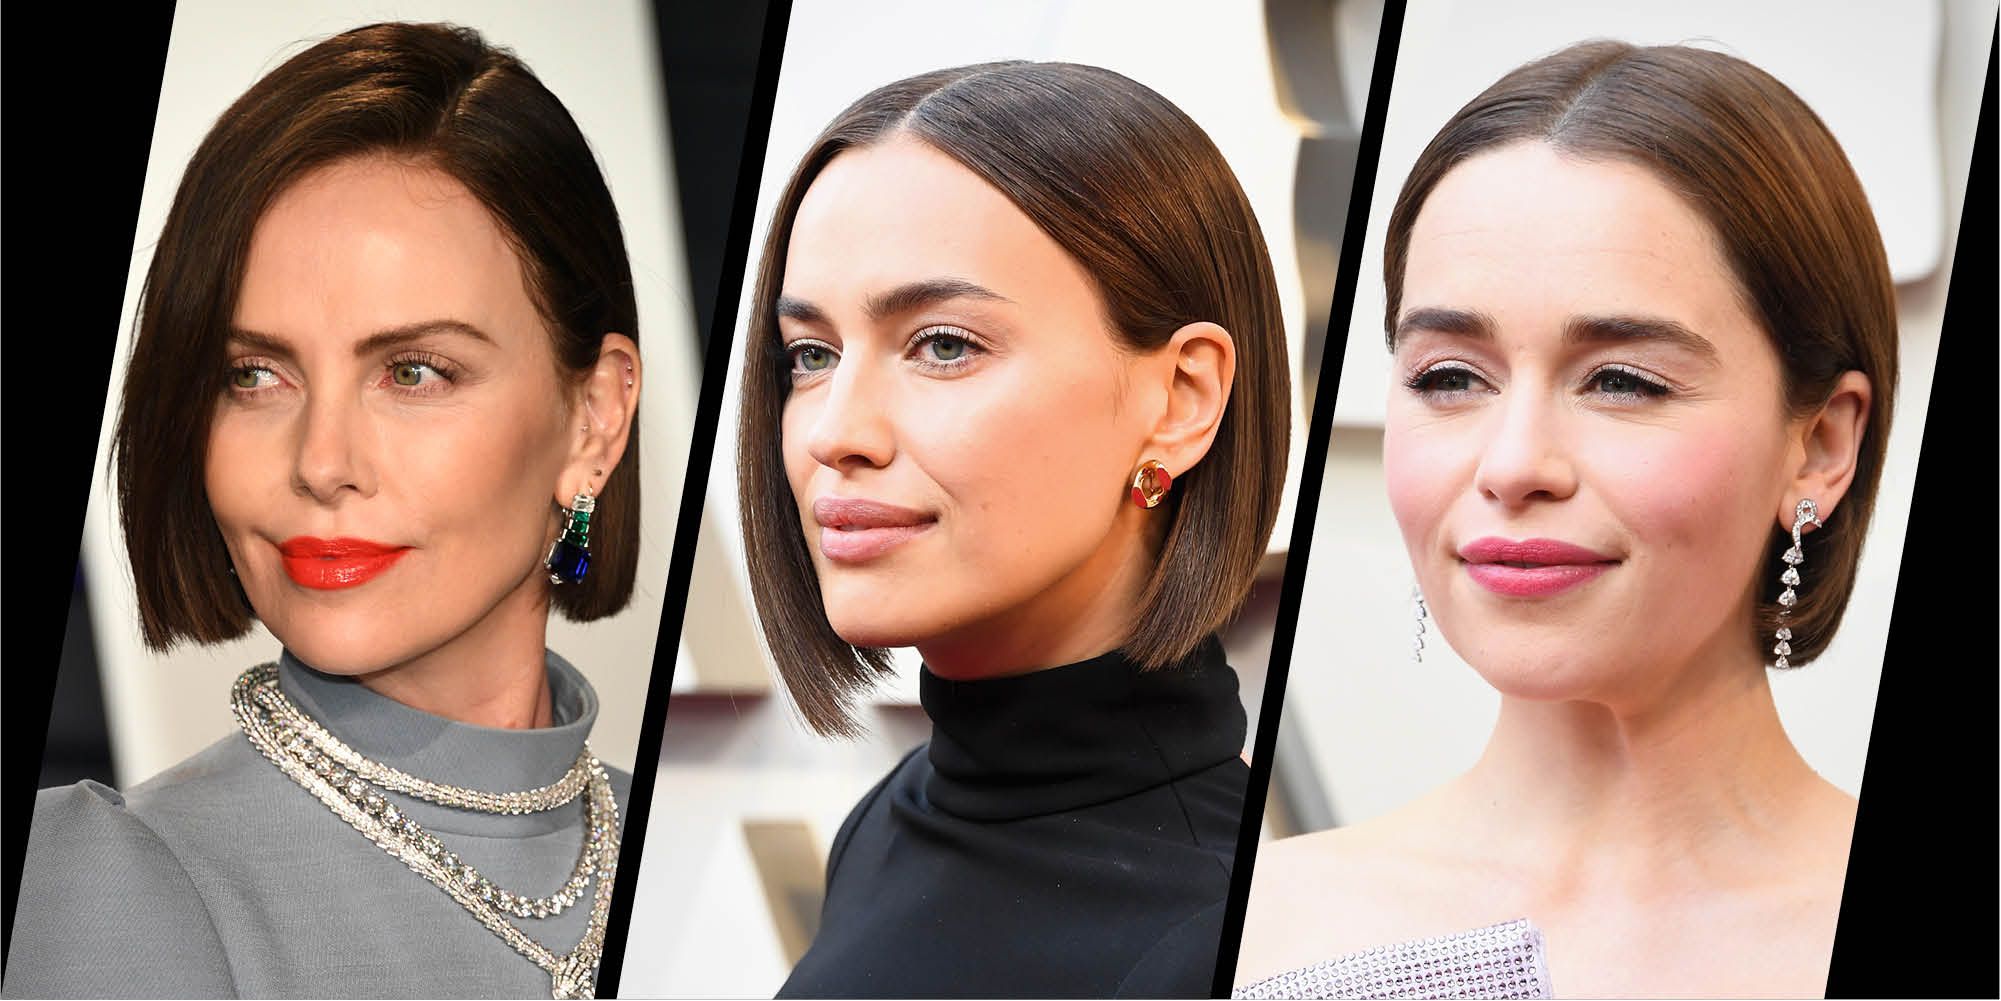 Brunette bobs were trending at the Oscars 2019 - Charlize Theron, Irina Shayk, Emilia Clarke